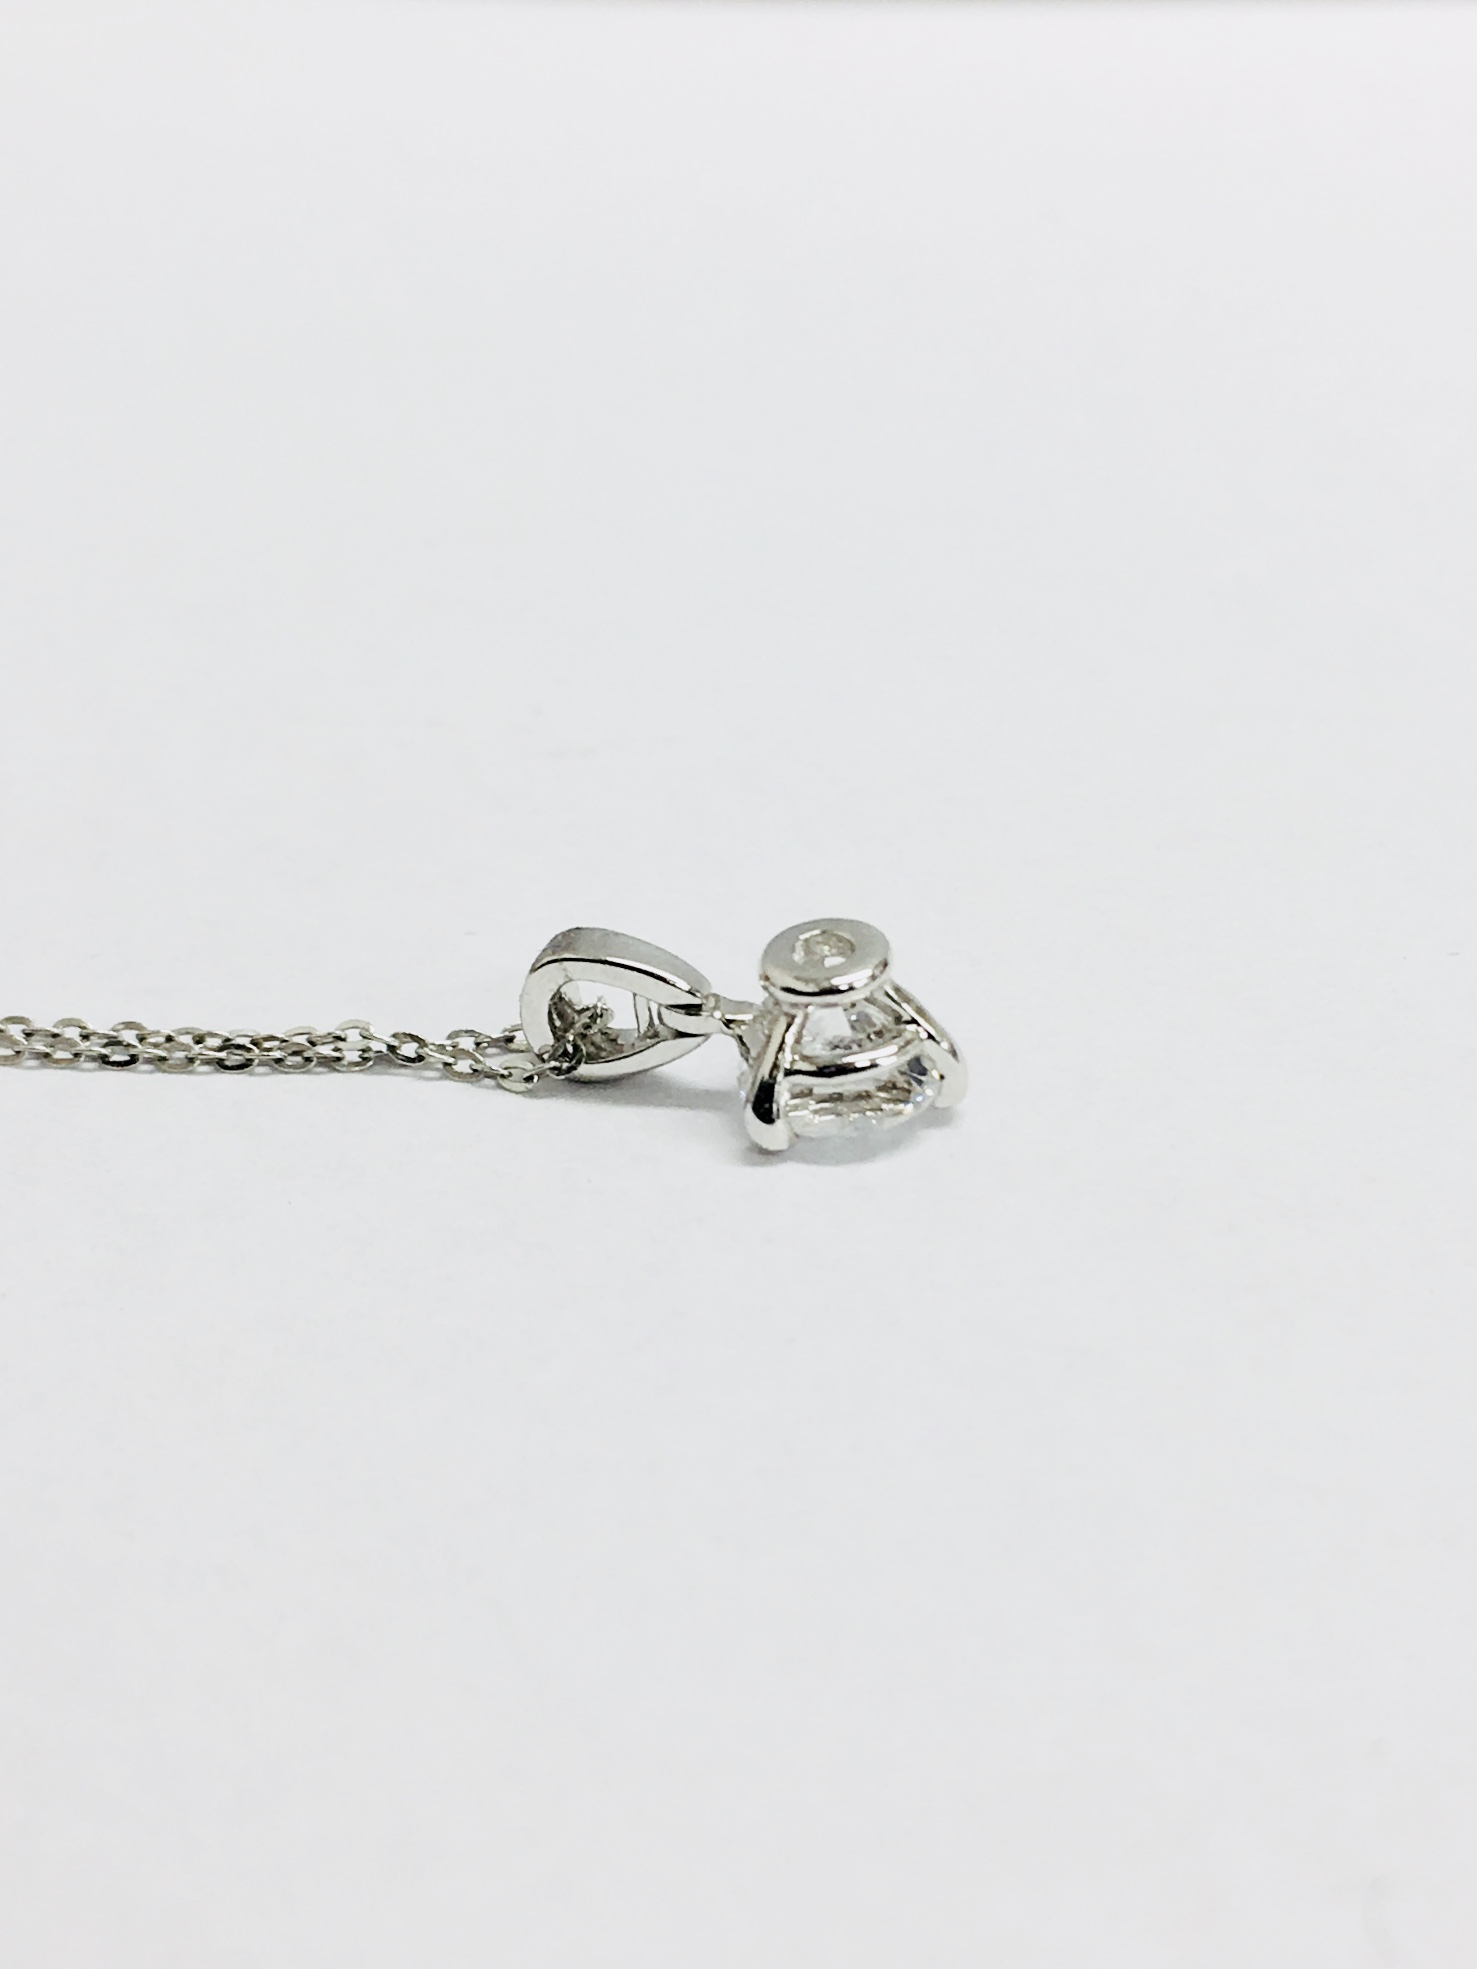 0.25ct diamond solitaire pendant set in 18ct gold. Brilliant cut diamond, I colour and si3 - Image 2 of 4